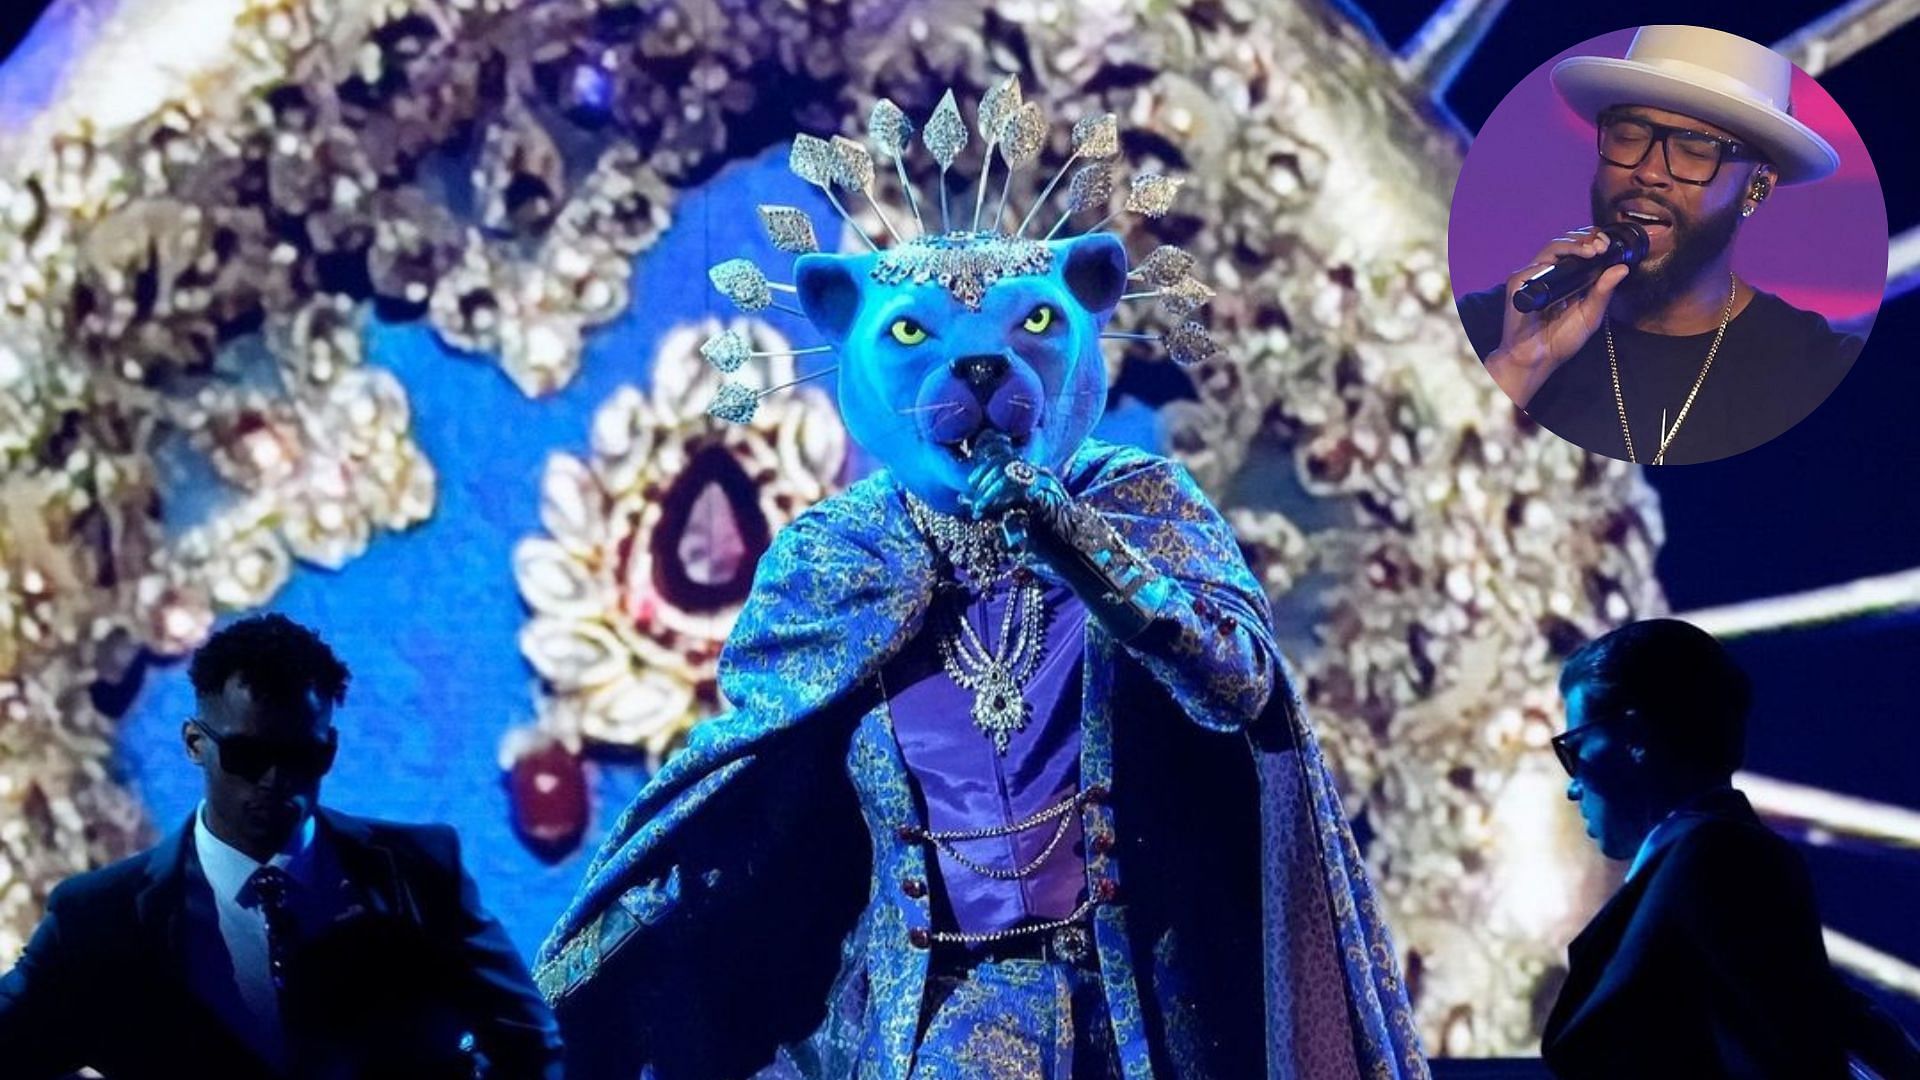 The Panther from The Masked Singer (Image via Instagram/@maskedsingerfox and @montelljordan)